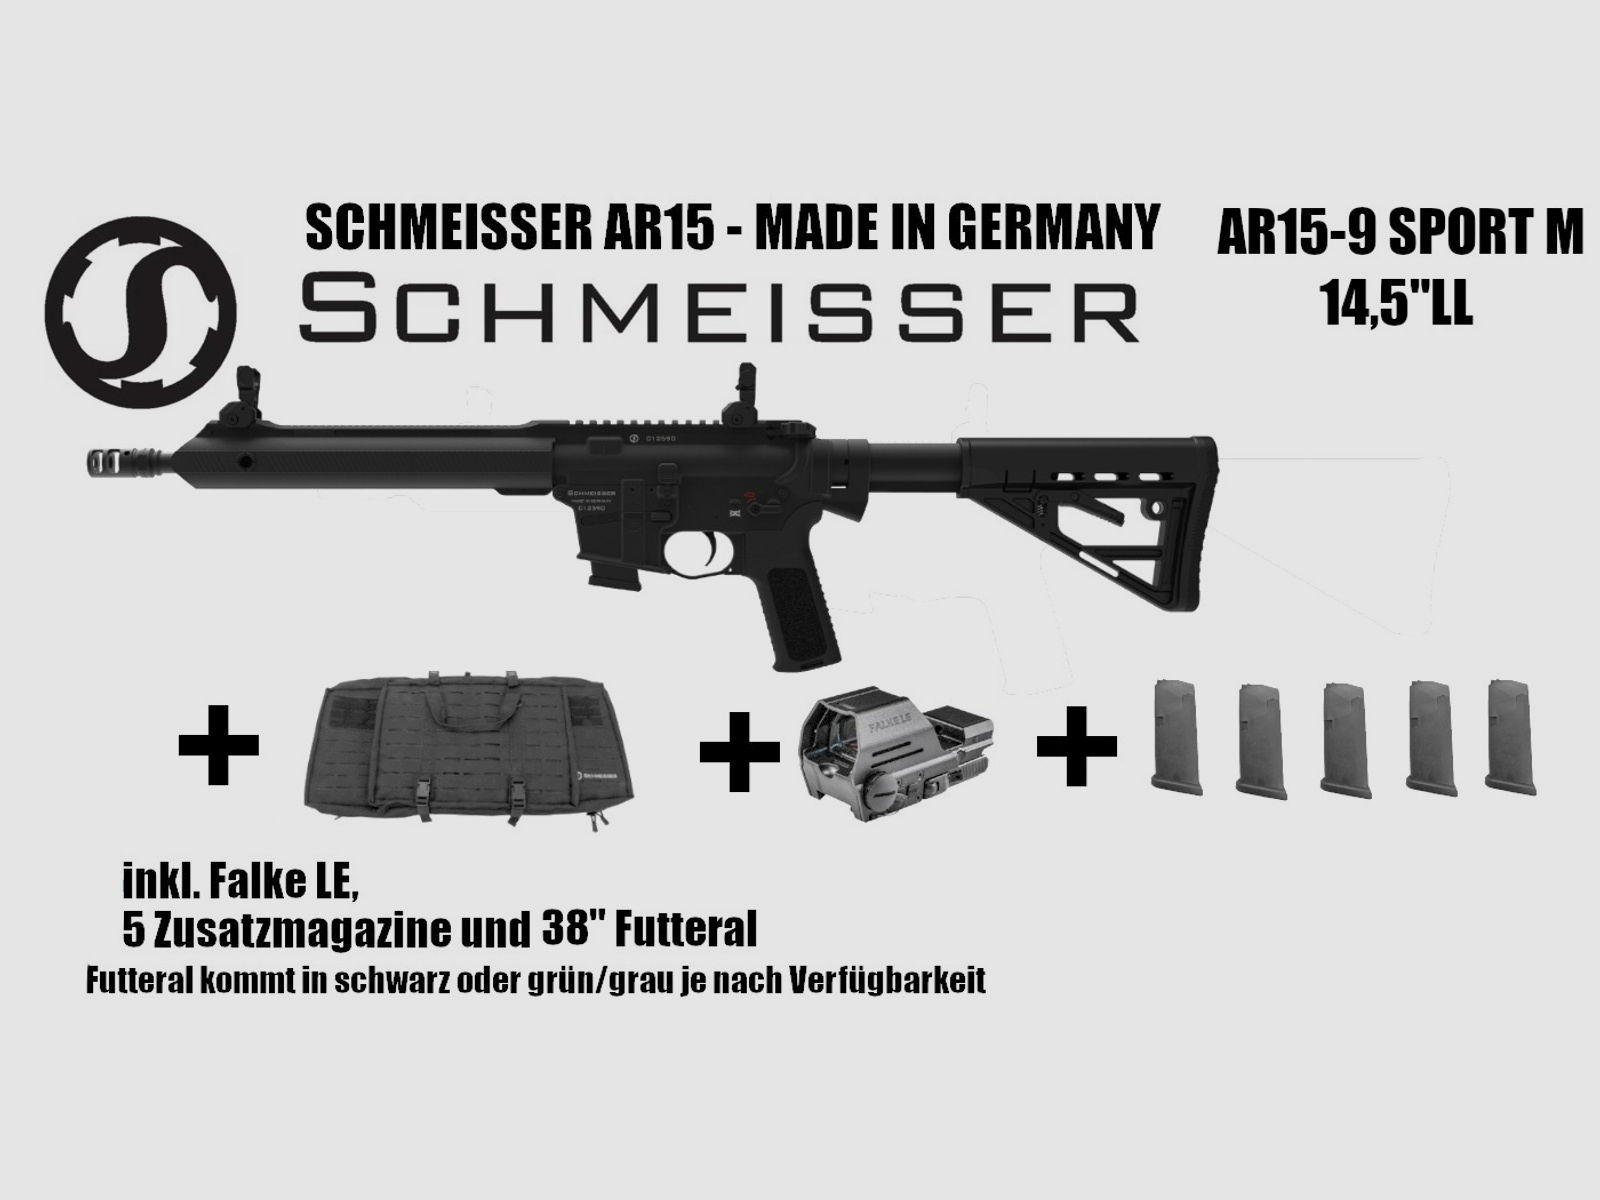 Schmeisser AR15-9 Sport M 14,5" LL 9mm Luger Büchse + Falke LE + 5 Magazine + Futteral UVP: 3008€ - Frühjahrskracher